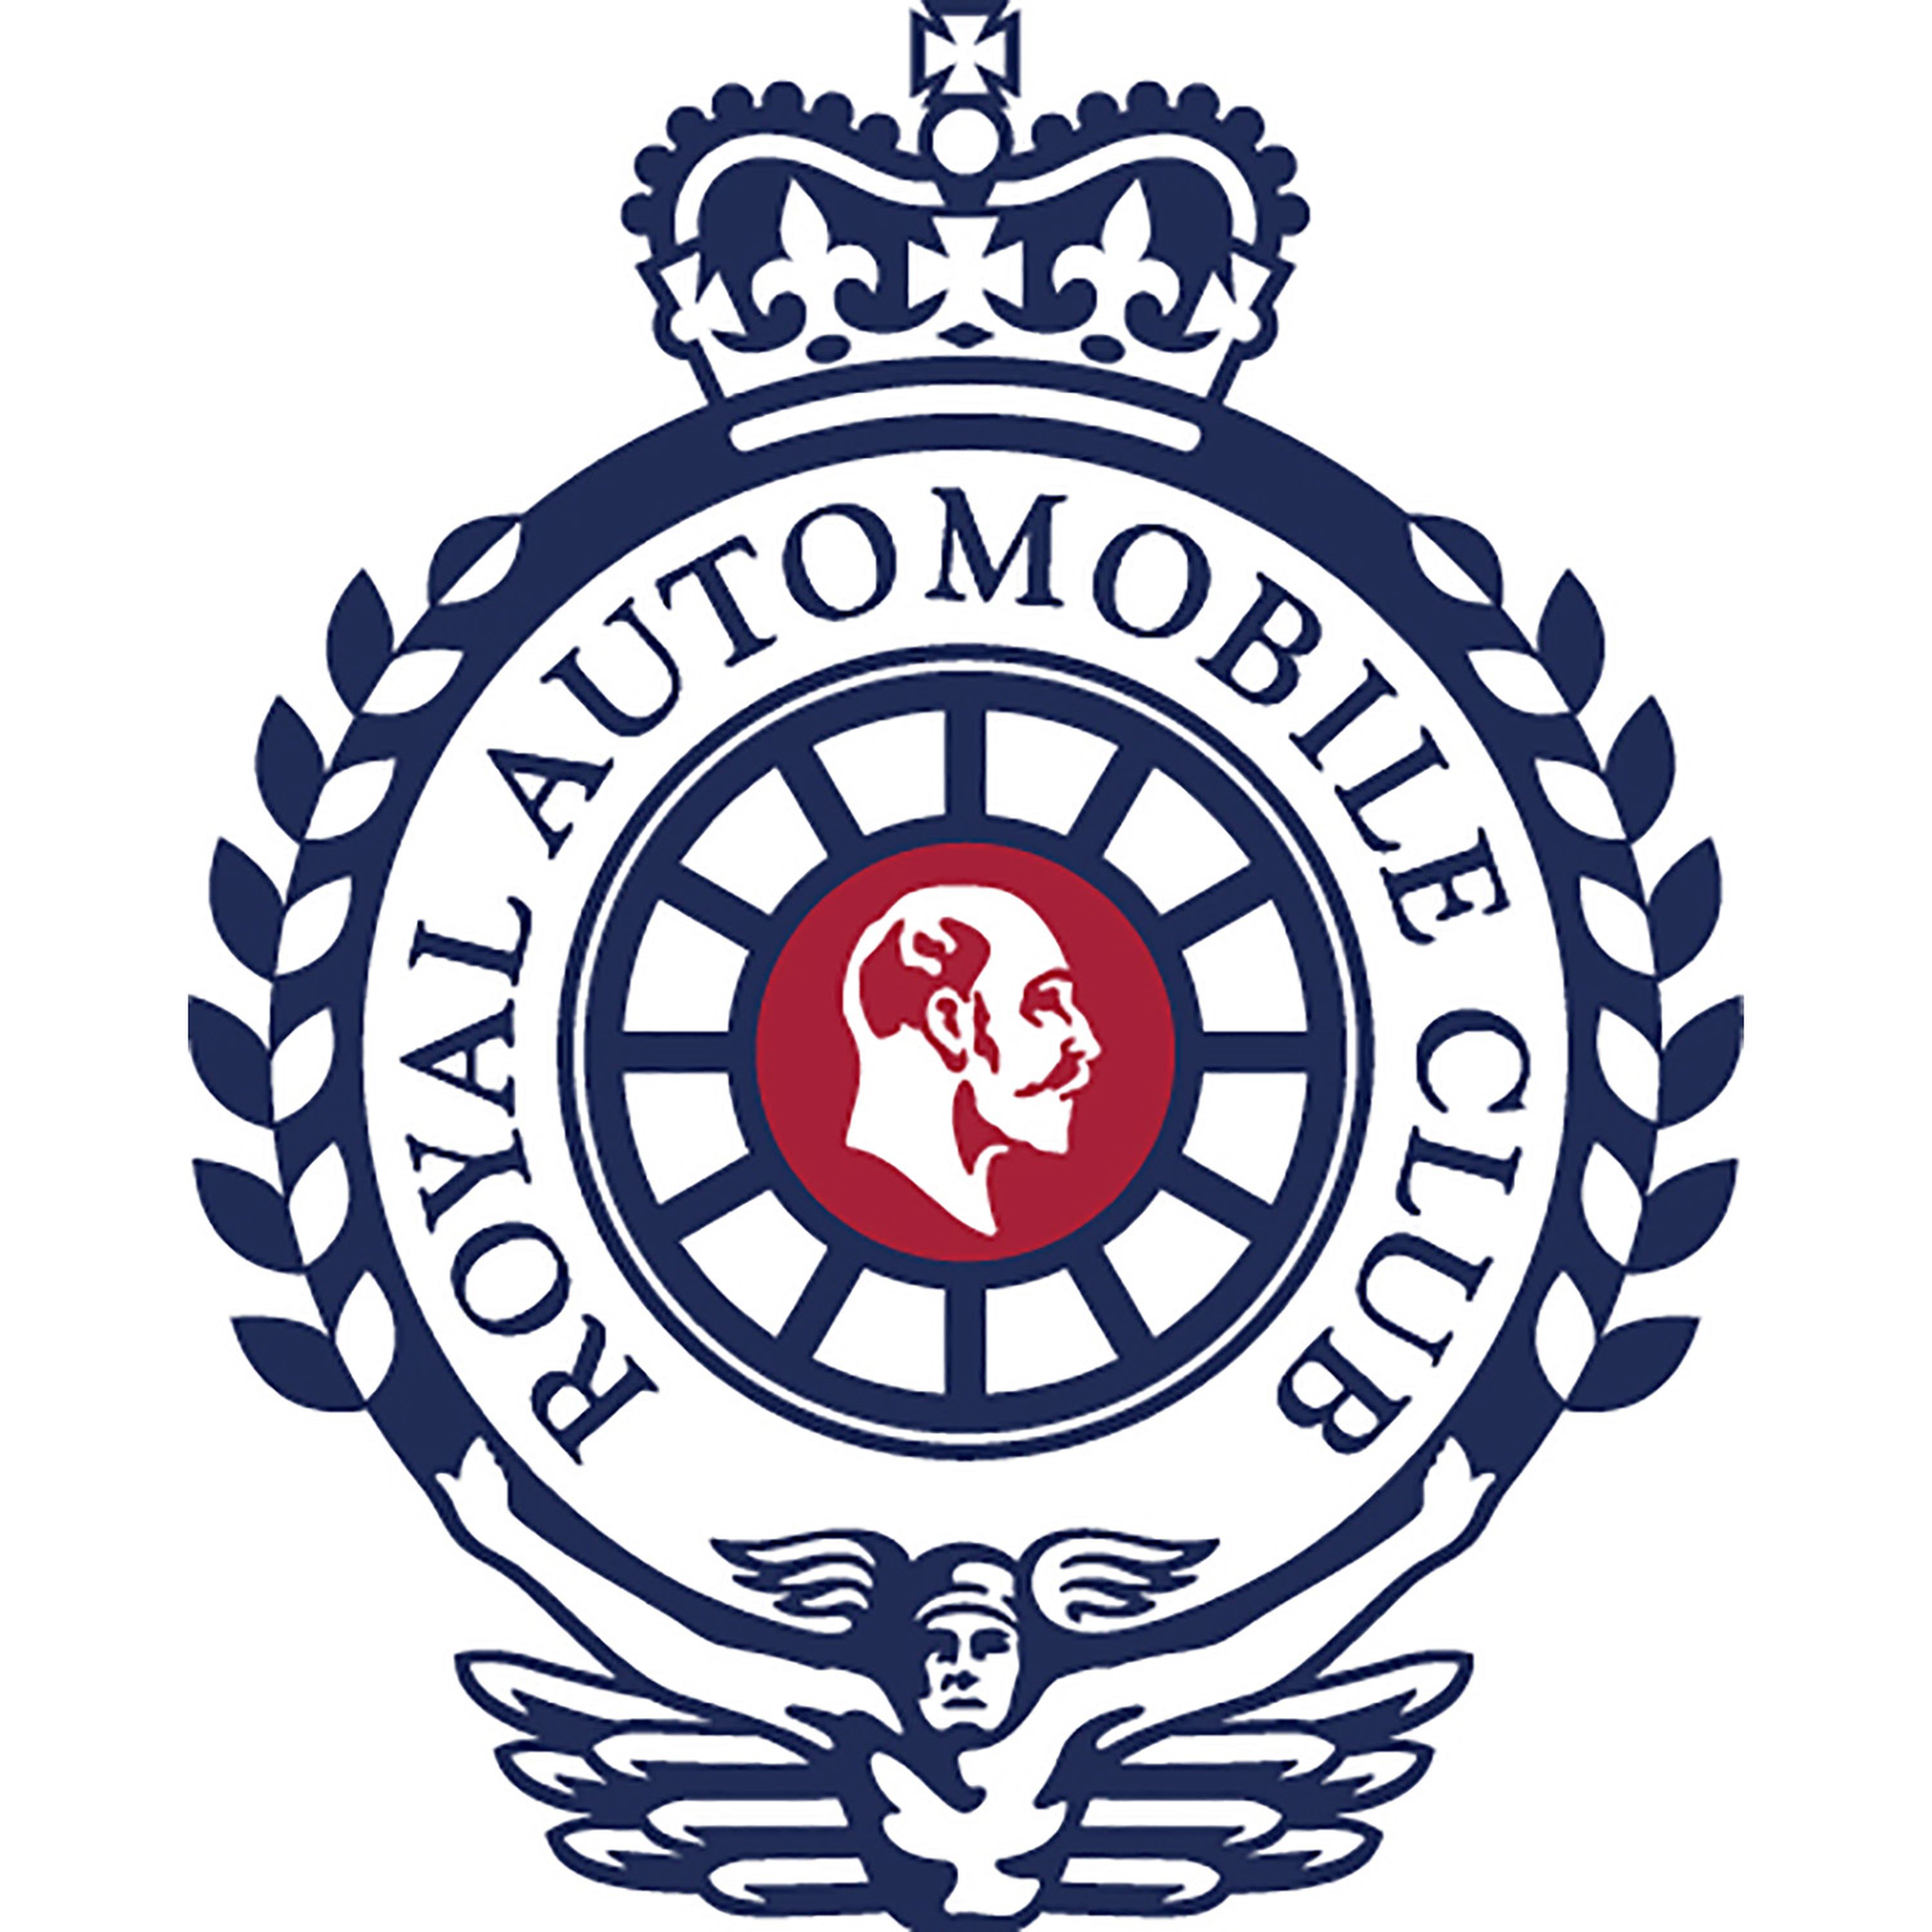 Murray Walker: Royal Automobile Club talk show